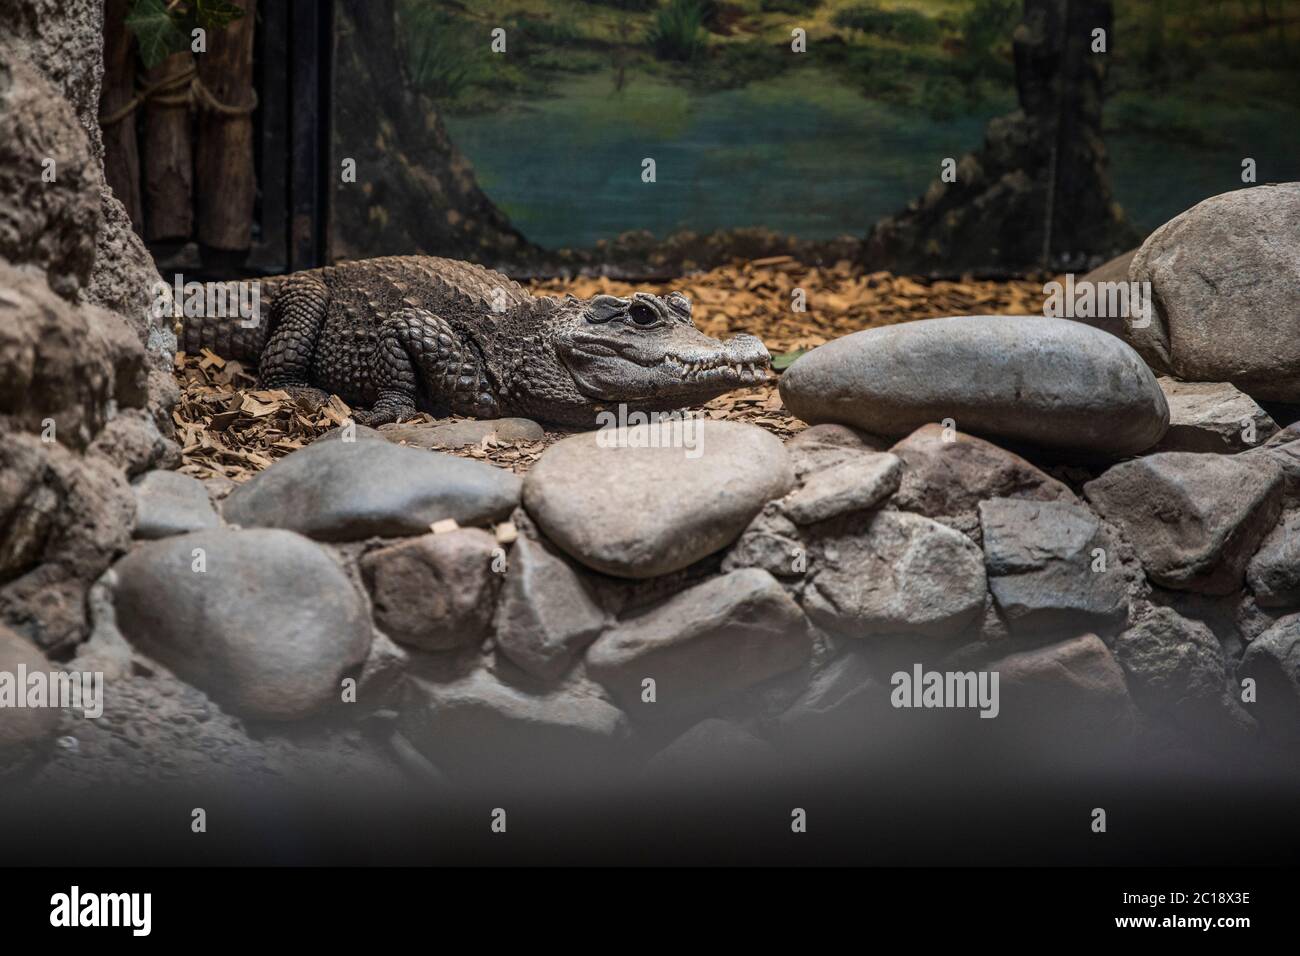 white alligator resting near some rocks Stock Photo